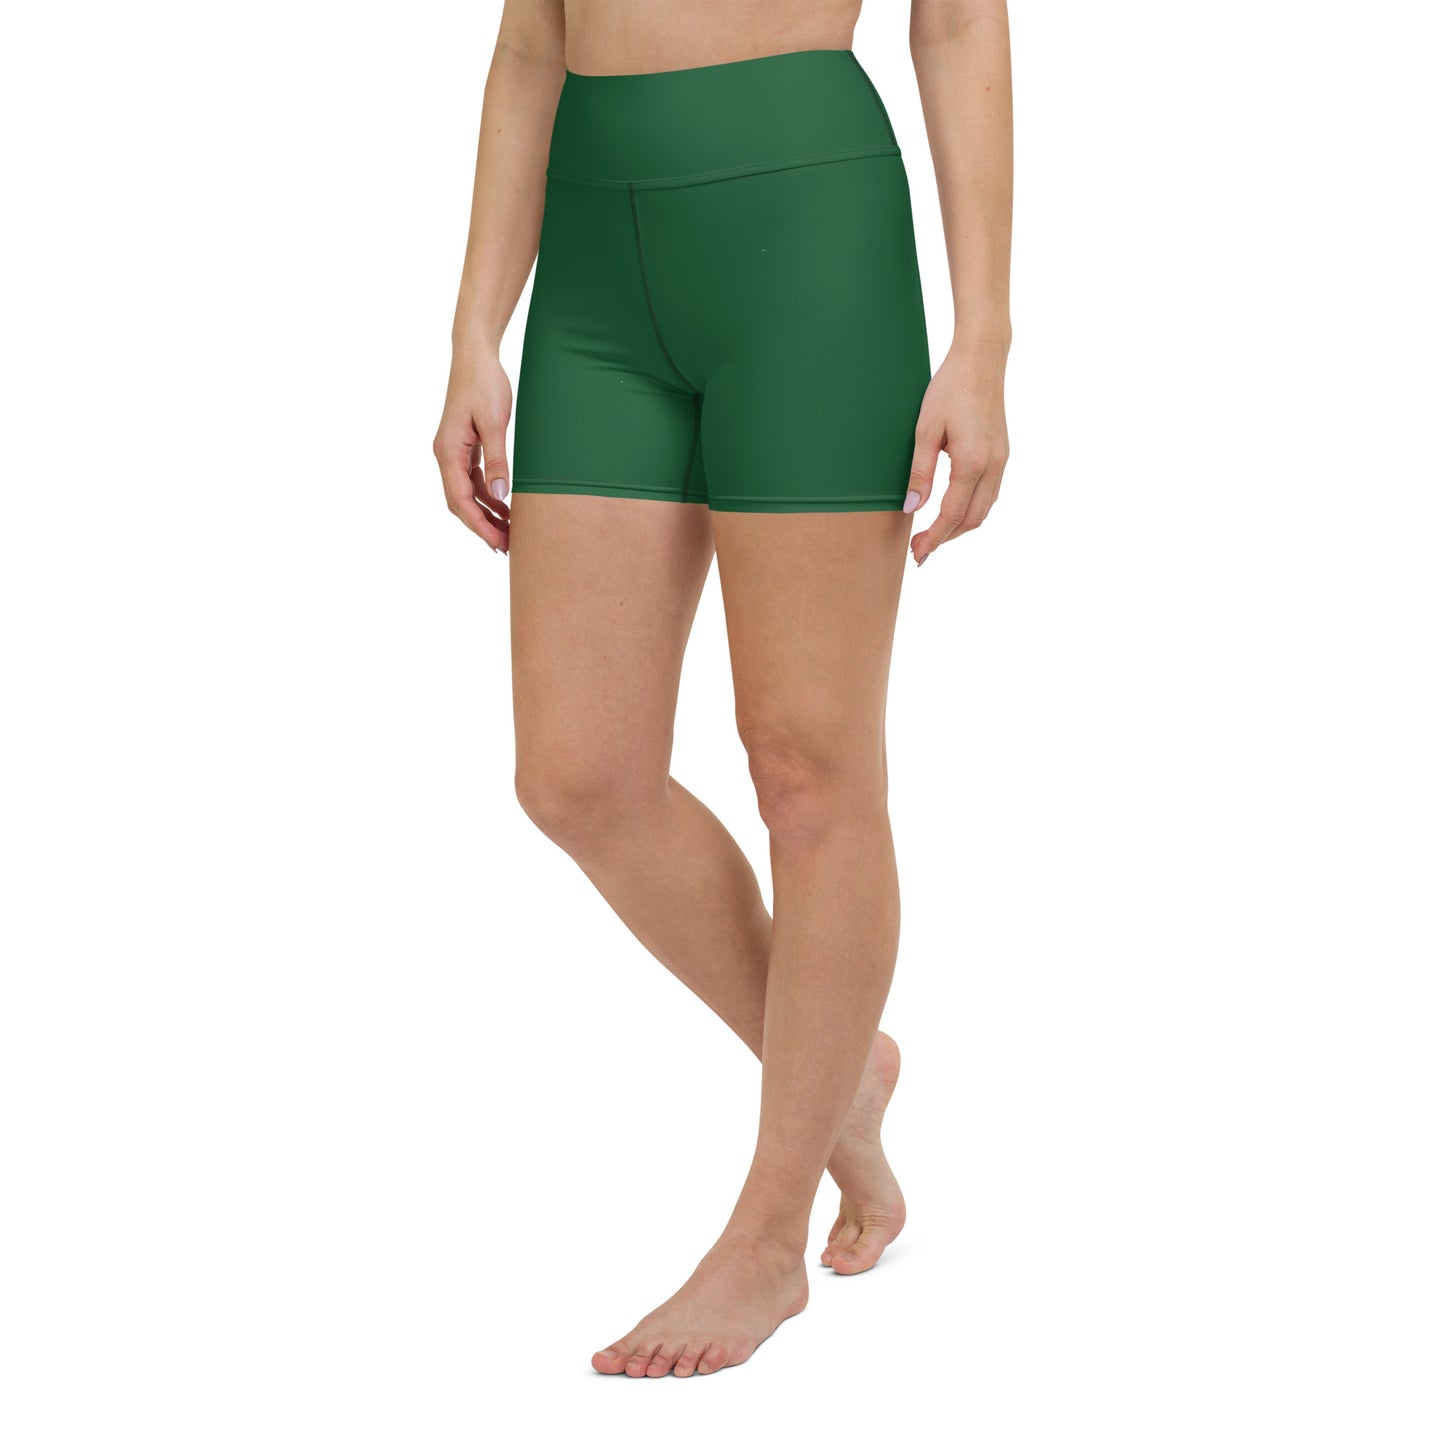 Edelweiss Solid Green High Waist Yoga Shorts / Bike Shorts with Inside Pocket